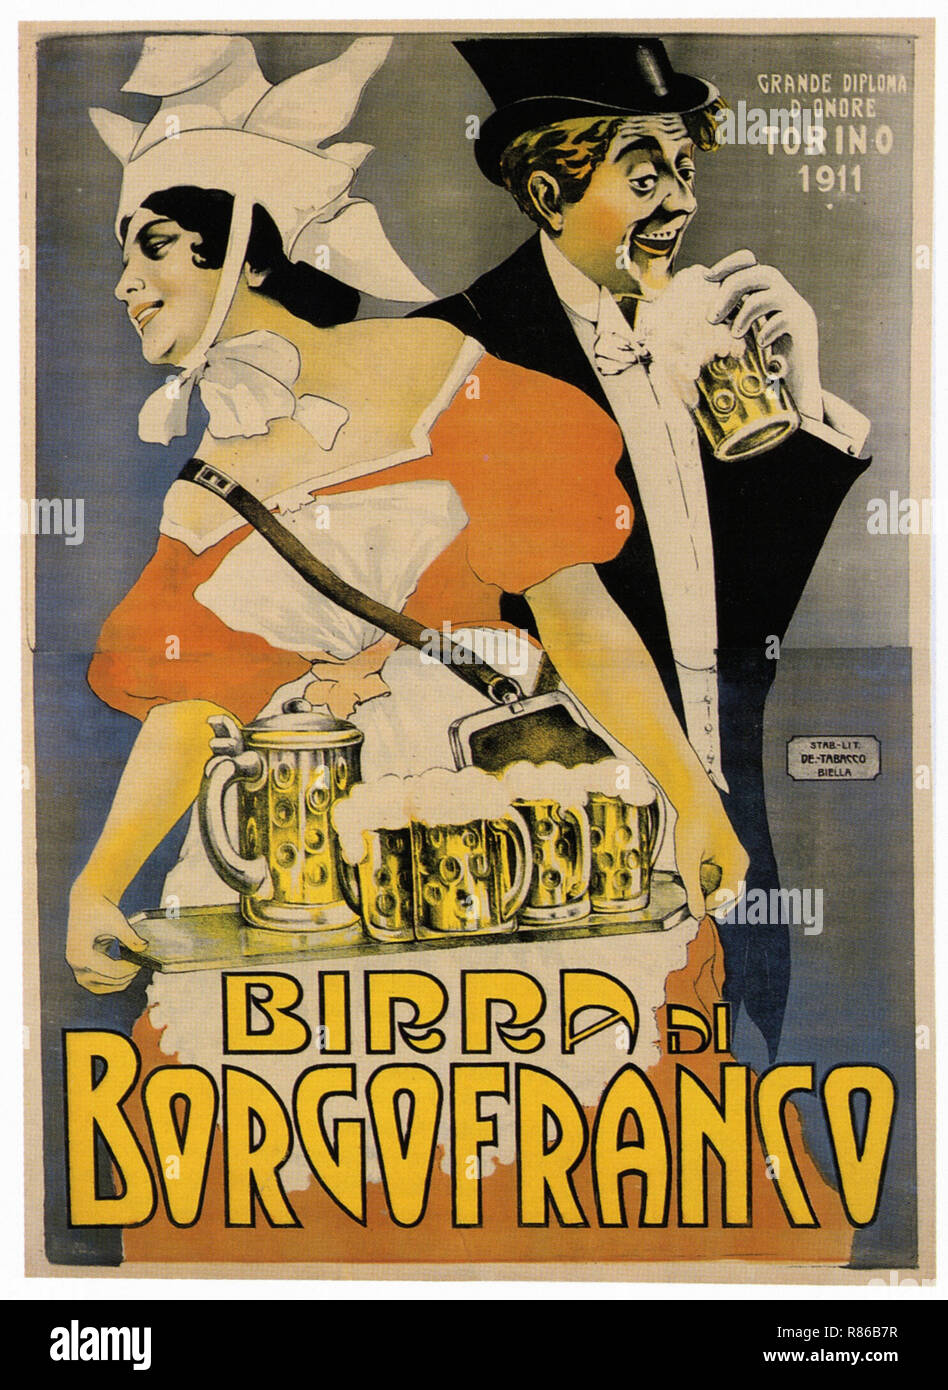 Birra Di Borgofranco 1911 - Vintage advertising poster Stock Photo